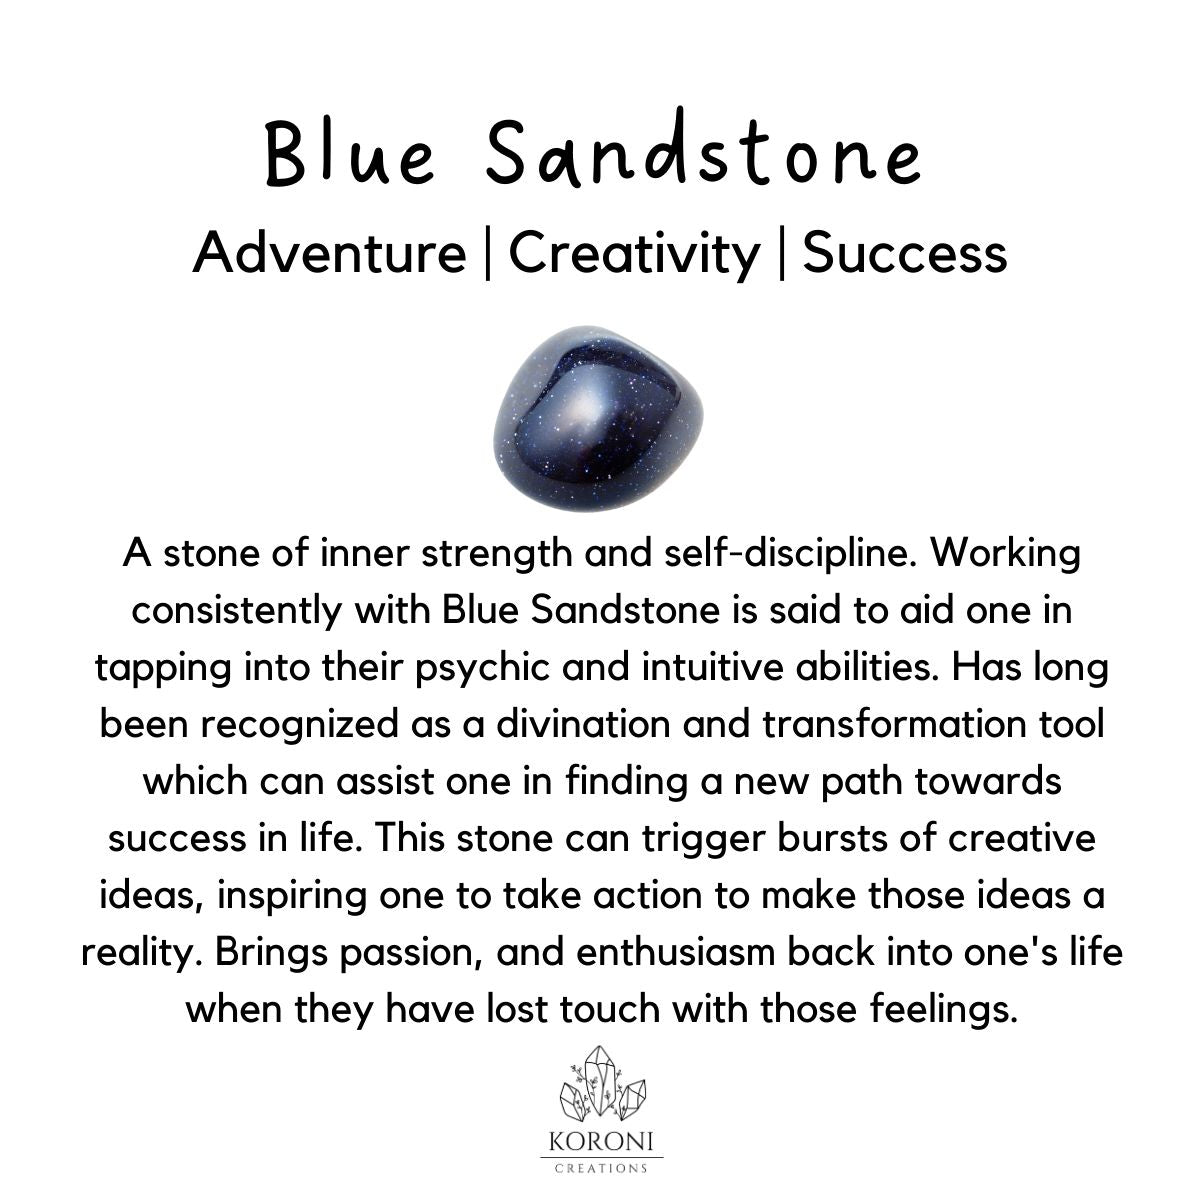 Blue Sandstone benefits.